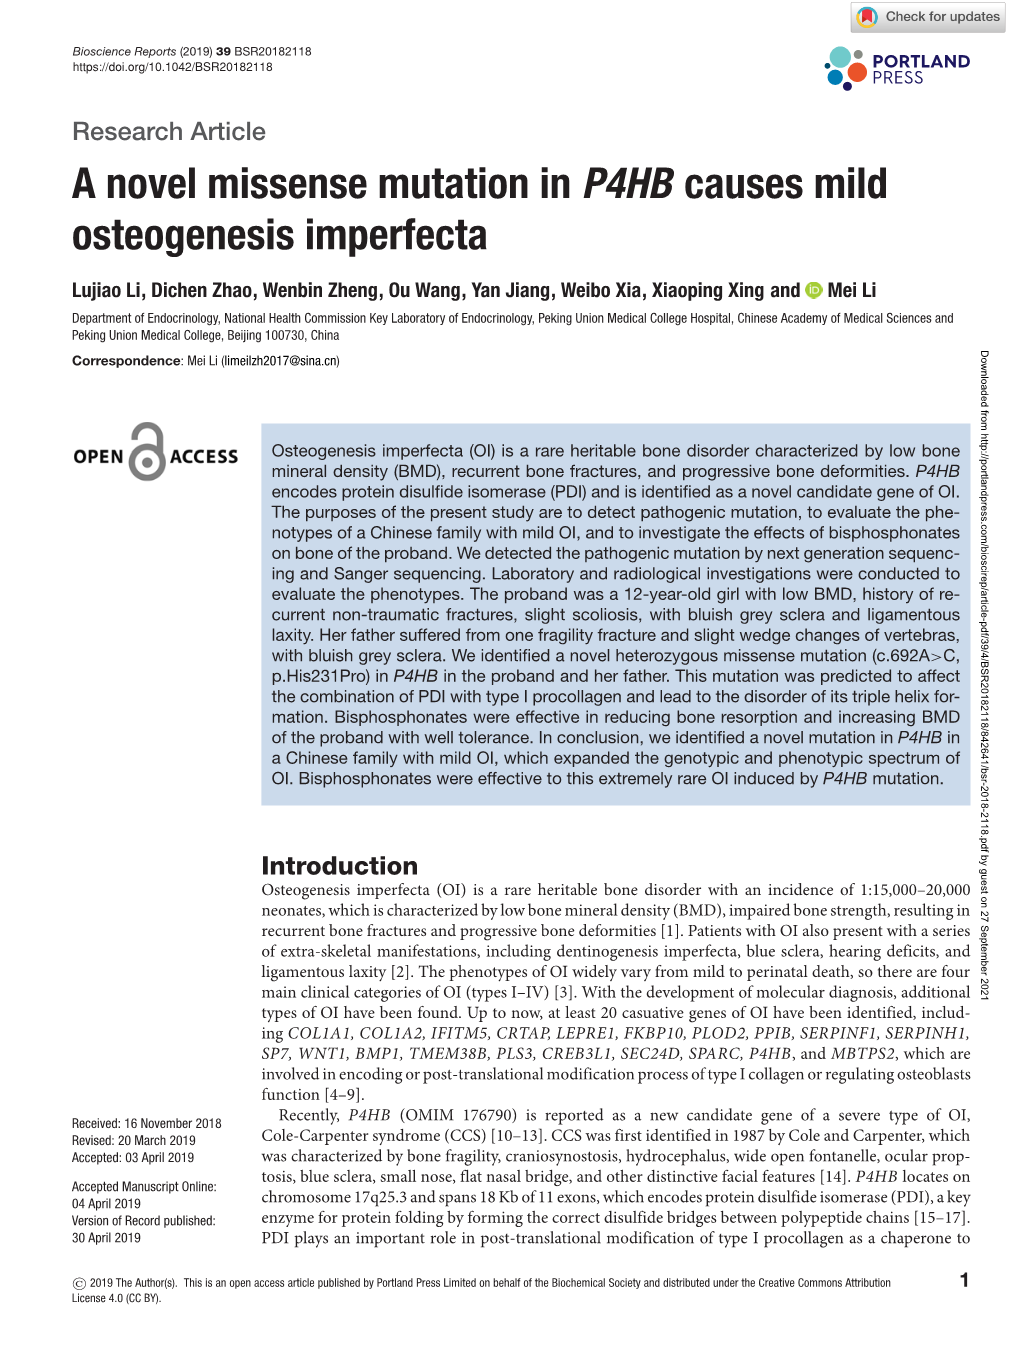 A Novel Missense Mutation in P4HB Causes Mild Osteogenesis Imperfecta